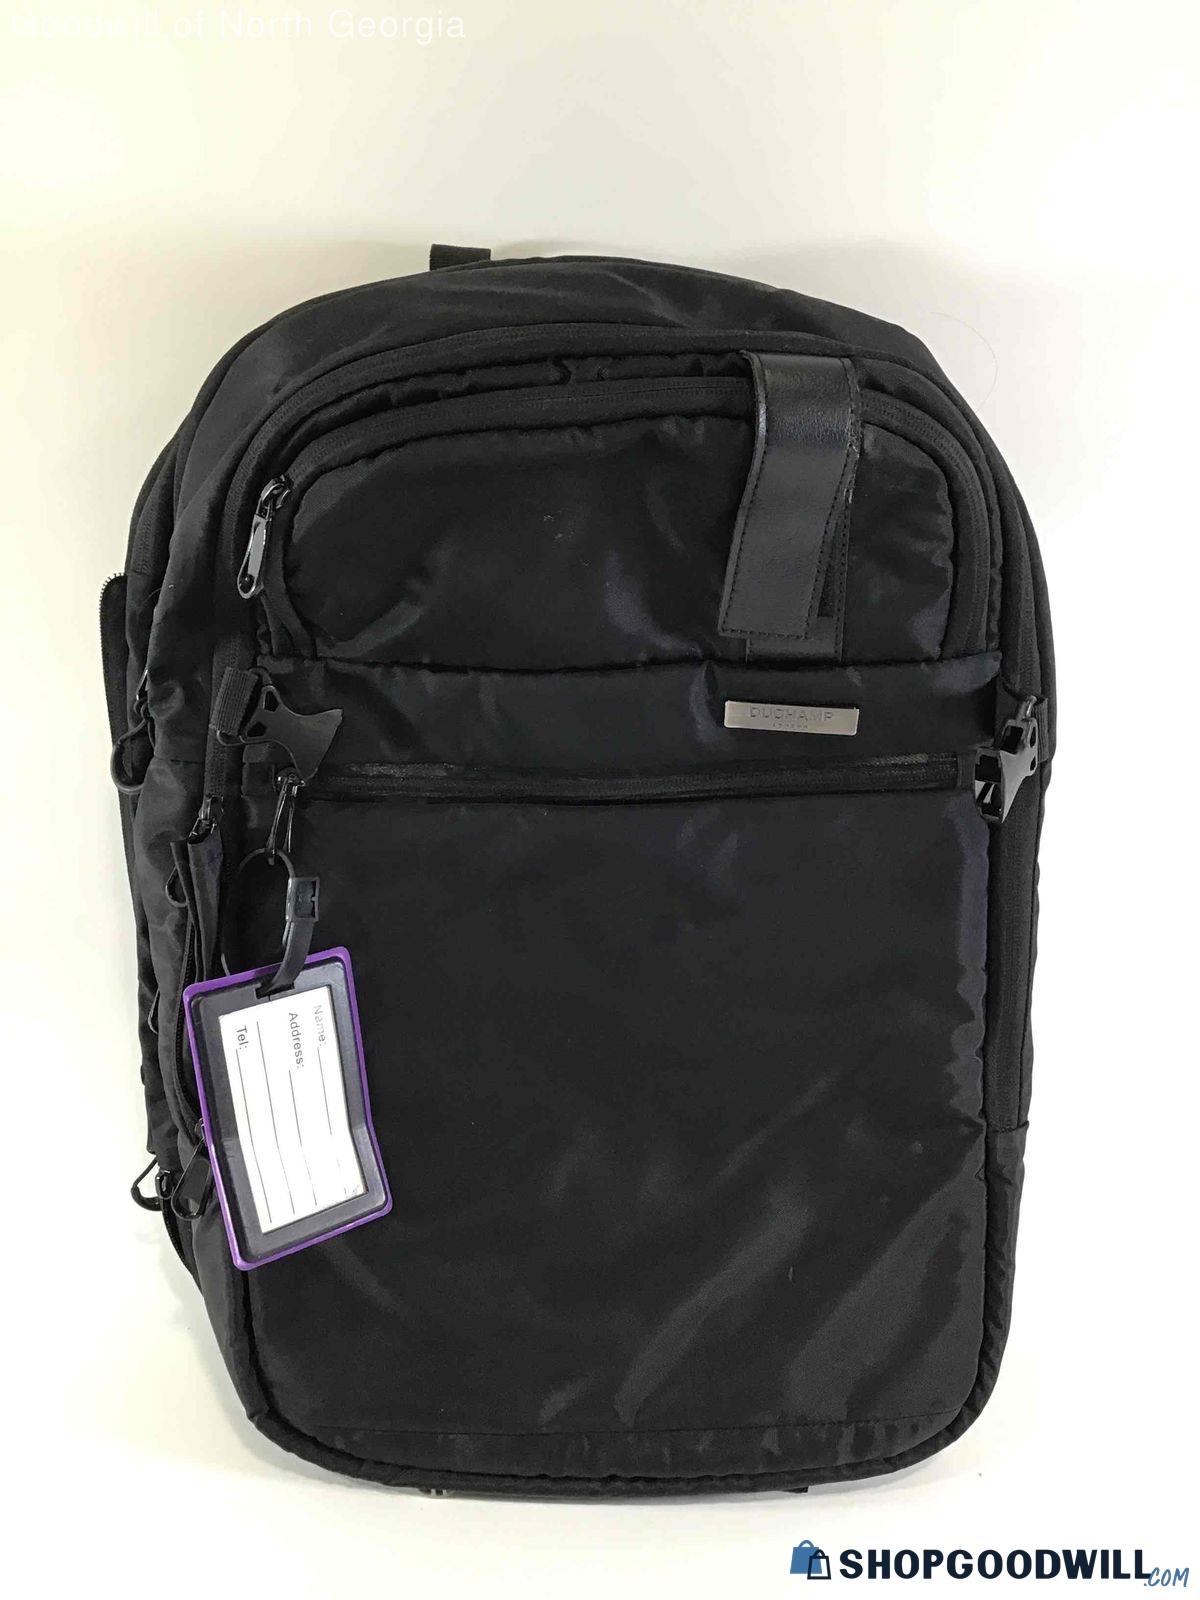 Duchamp Getaway Backpack Suitcase - shopgoodwill.com